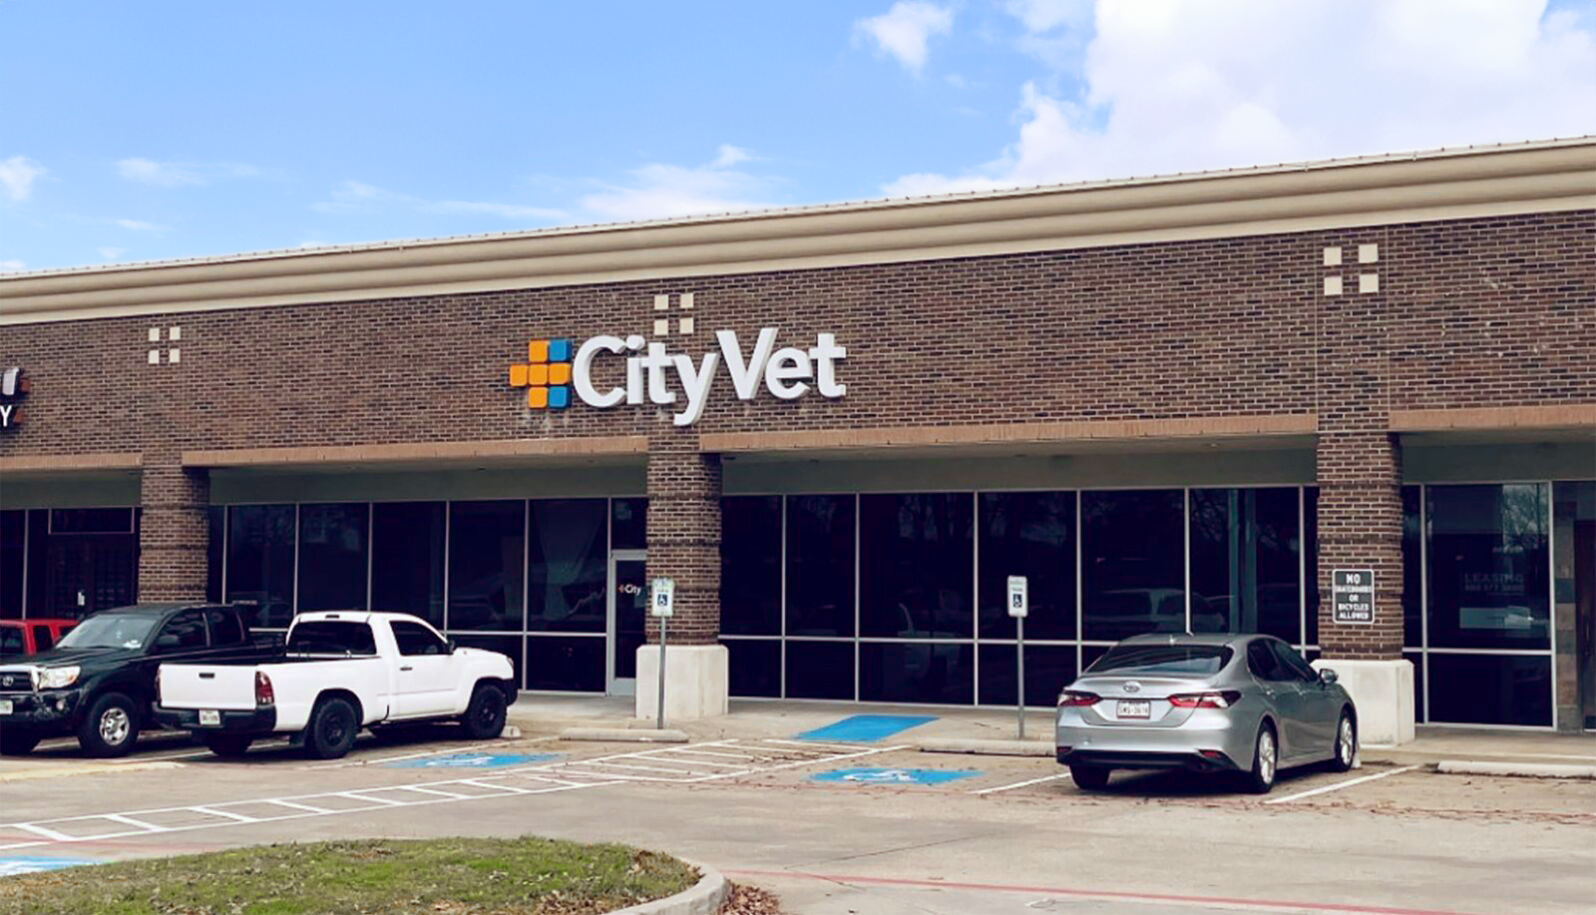 New CityVet location in Coppell, TX. (Image courtesy of CityVet)